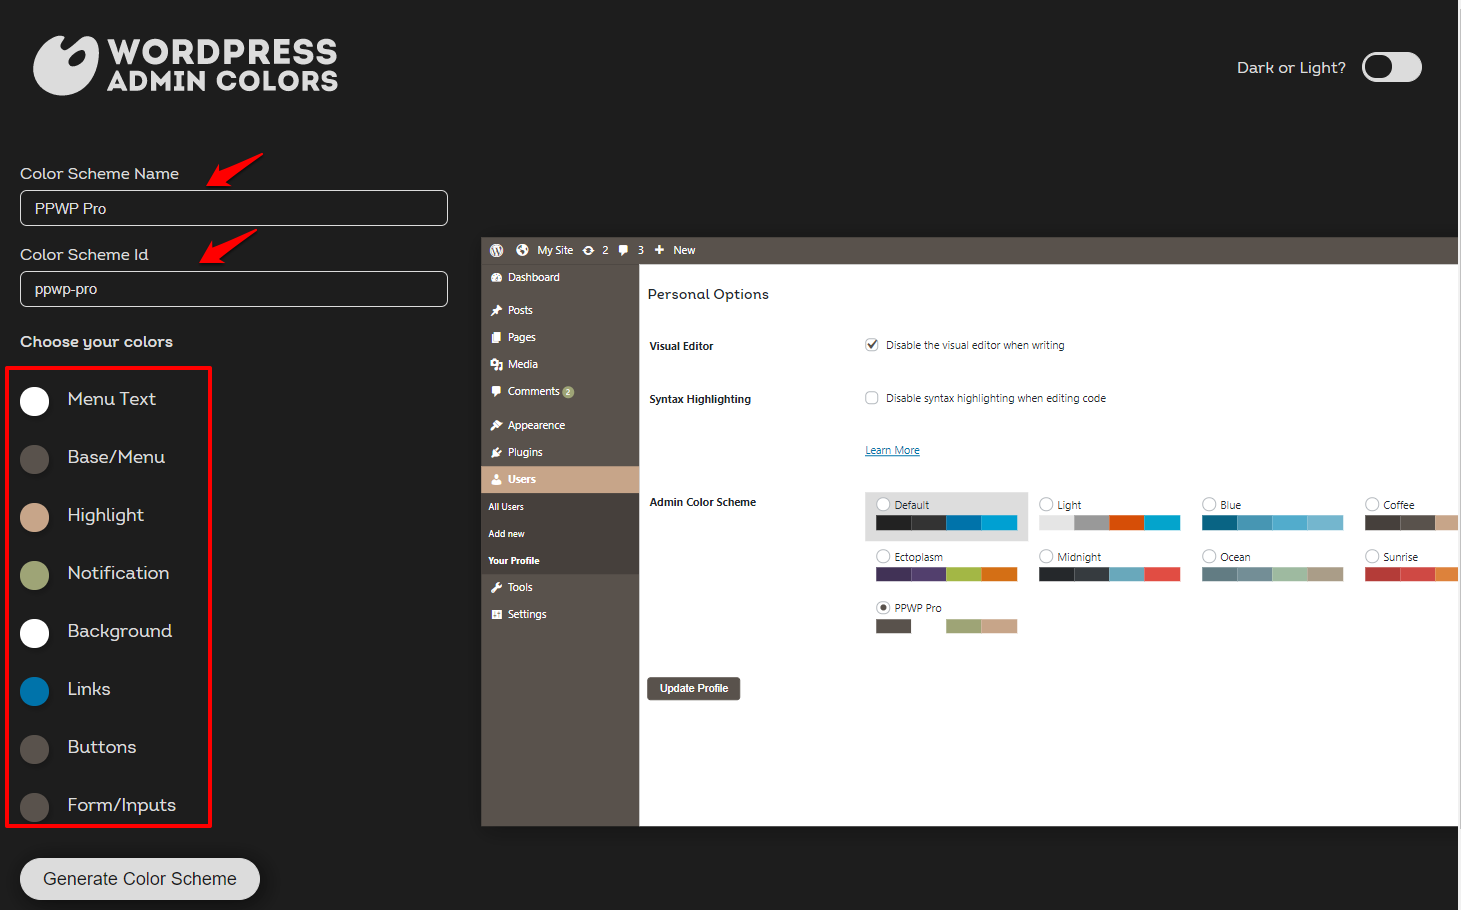 PPWP Pro: Name WordPress custom admin color scheme